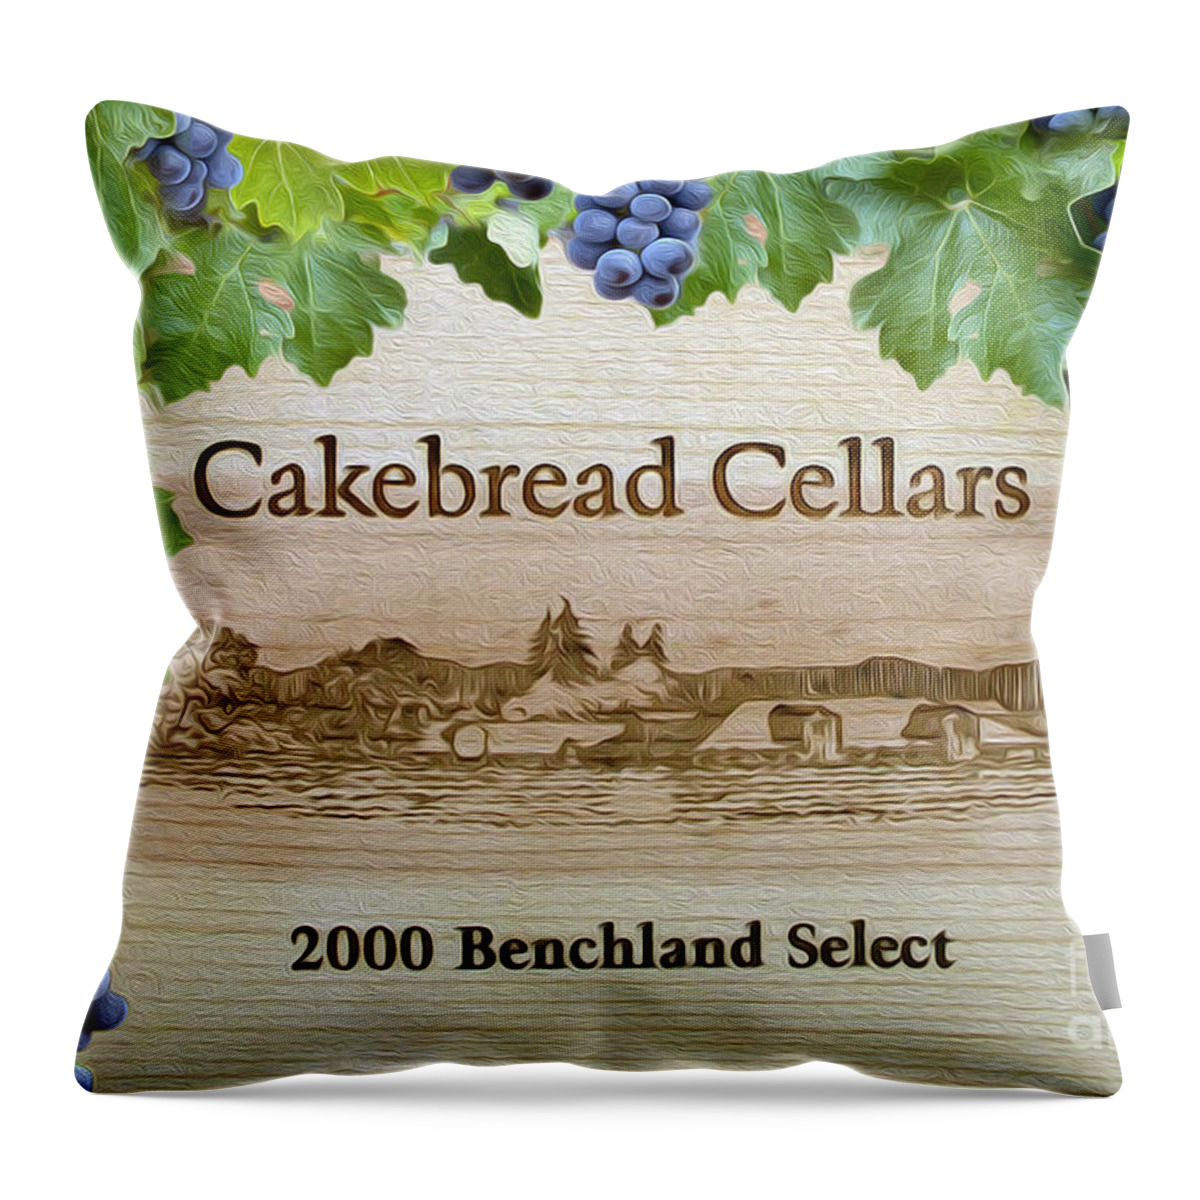 Cakebread Cellars Throw Pillow featuring the photograph Cakebread Cellars by Jon Neidert